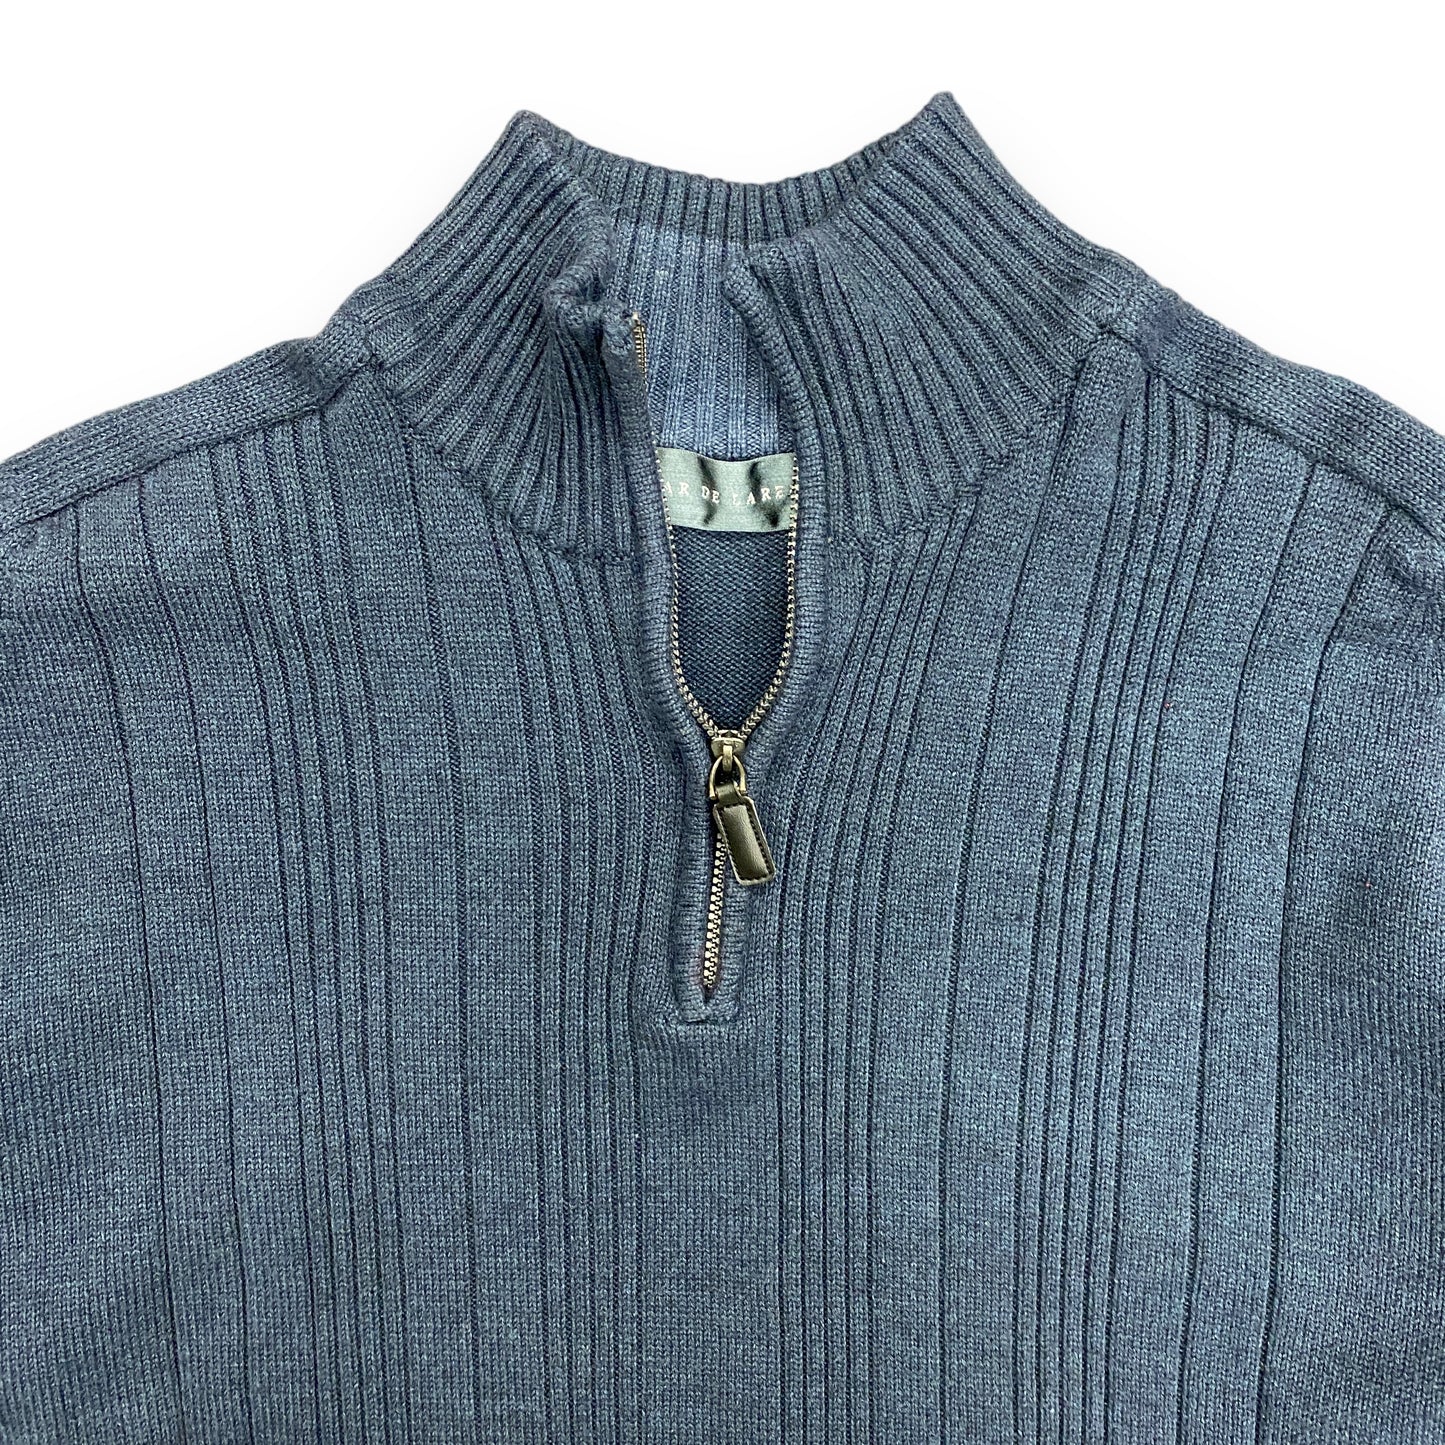 Oscar De La Renta Navy Blue Quarter Zip Sweater - Size Large